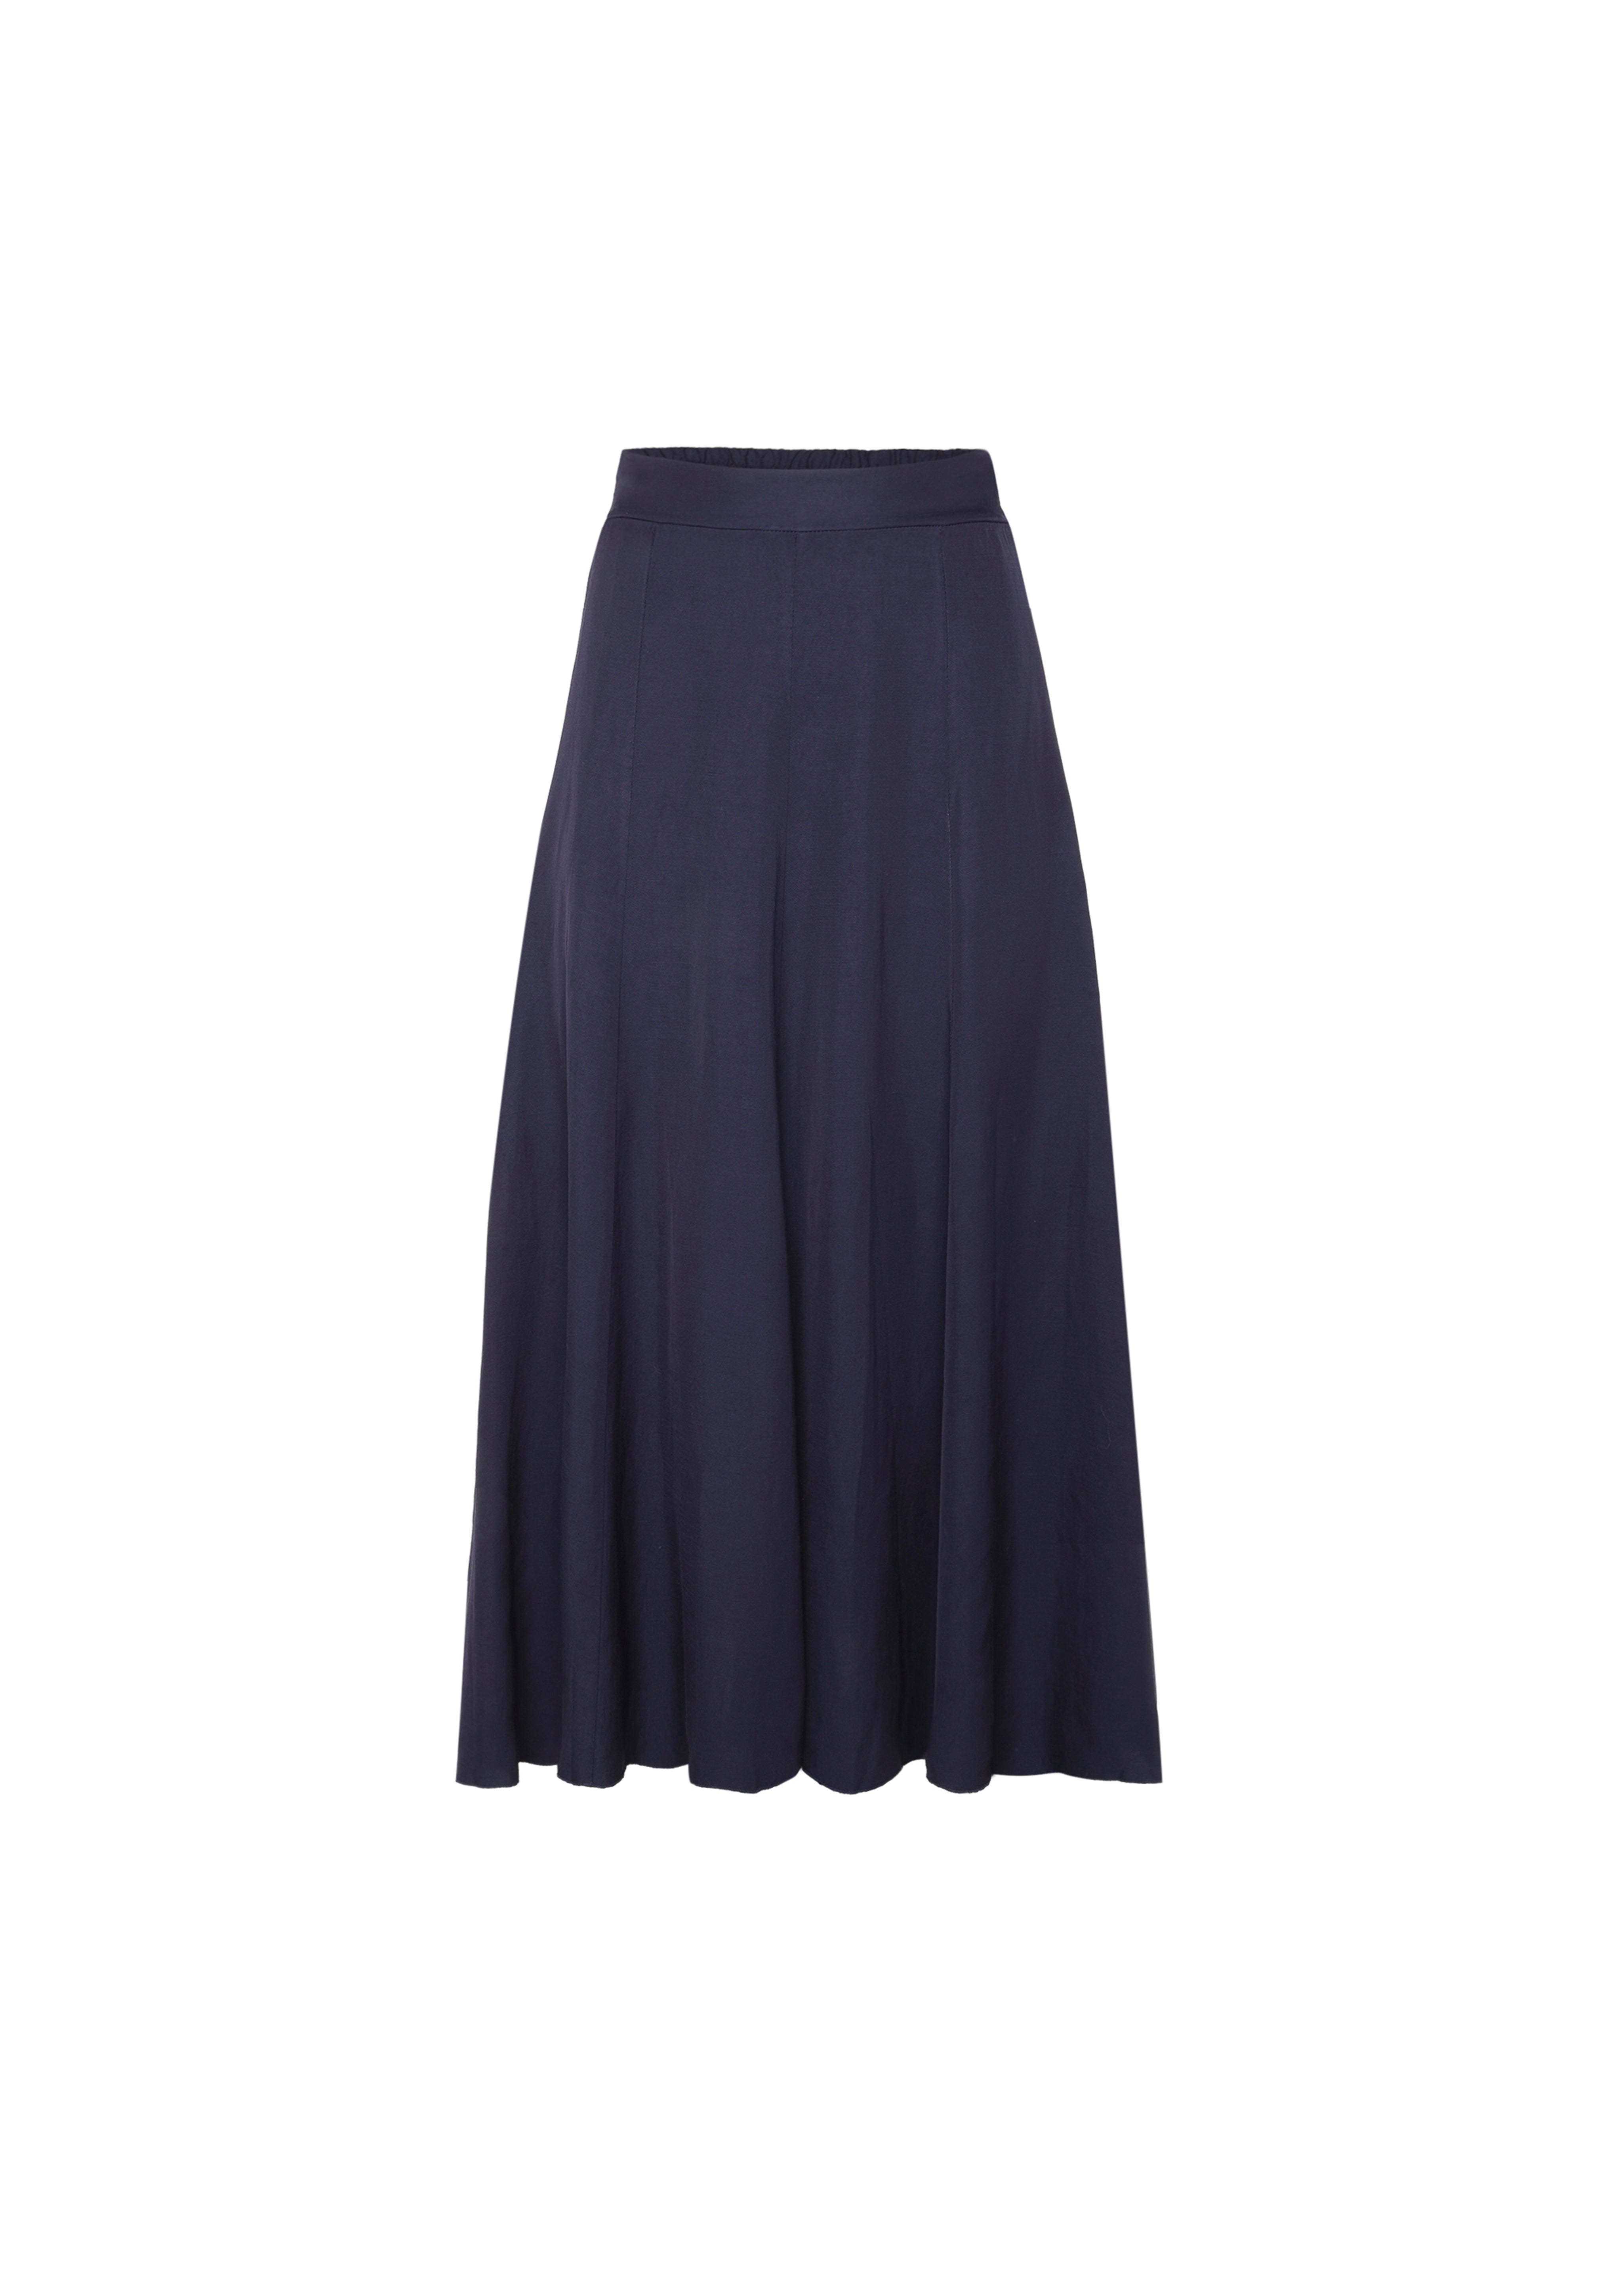 CLEYA skirt Navy blue